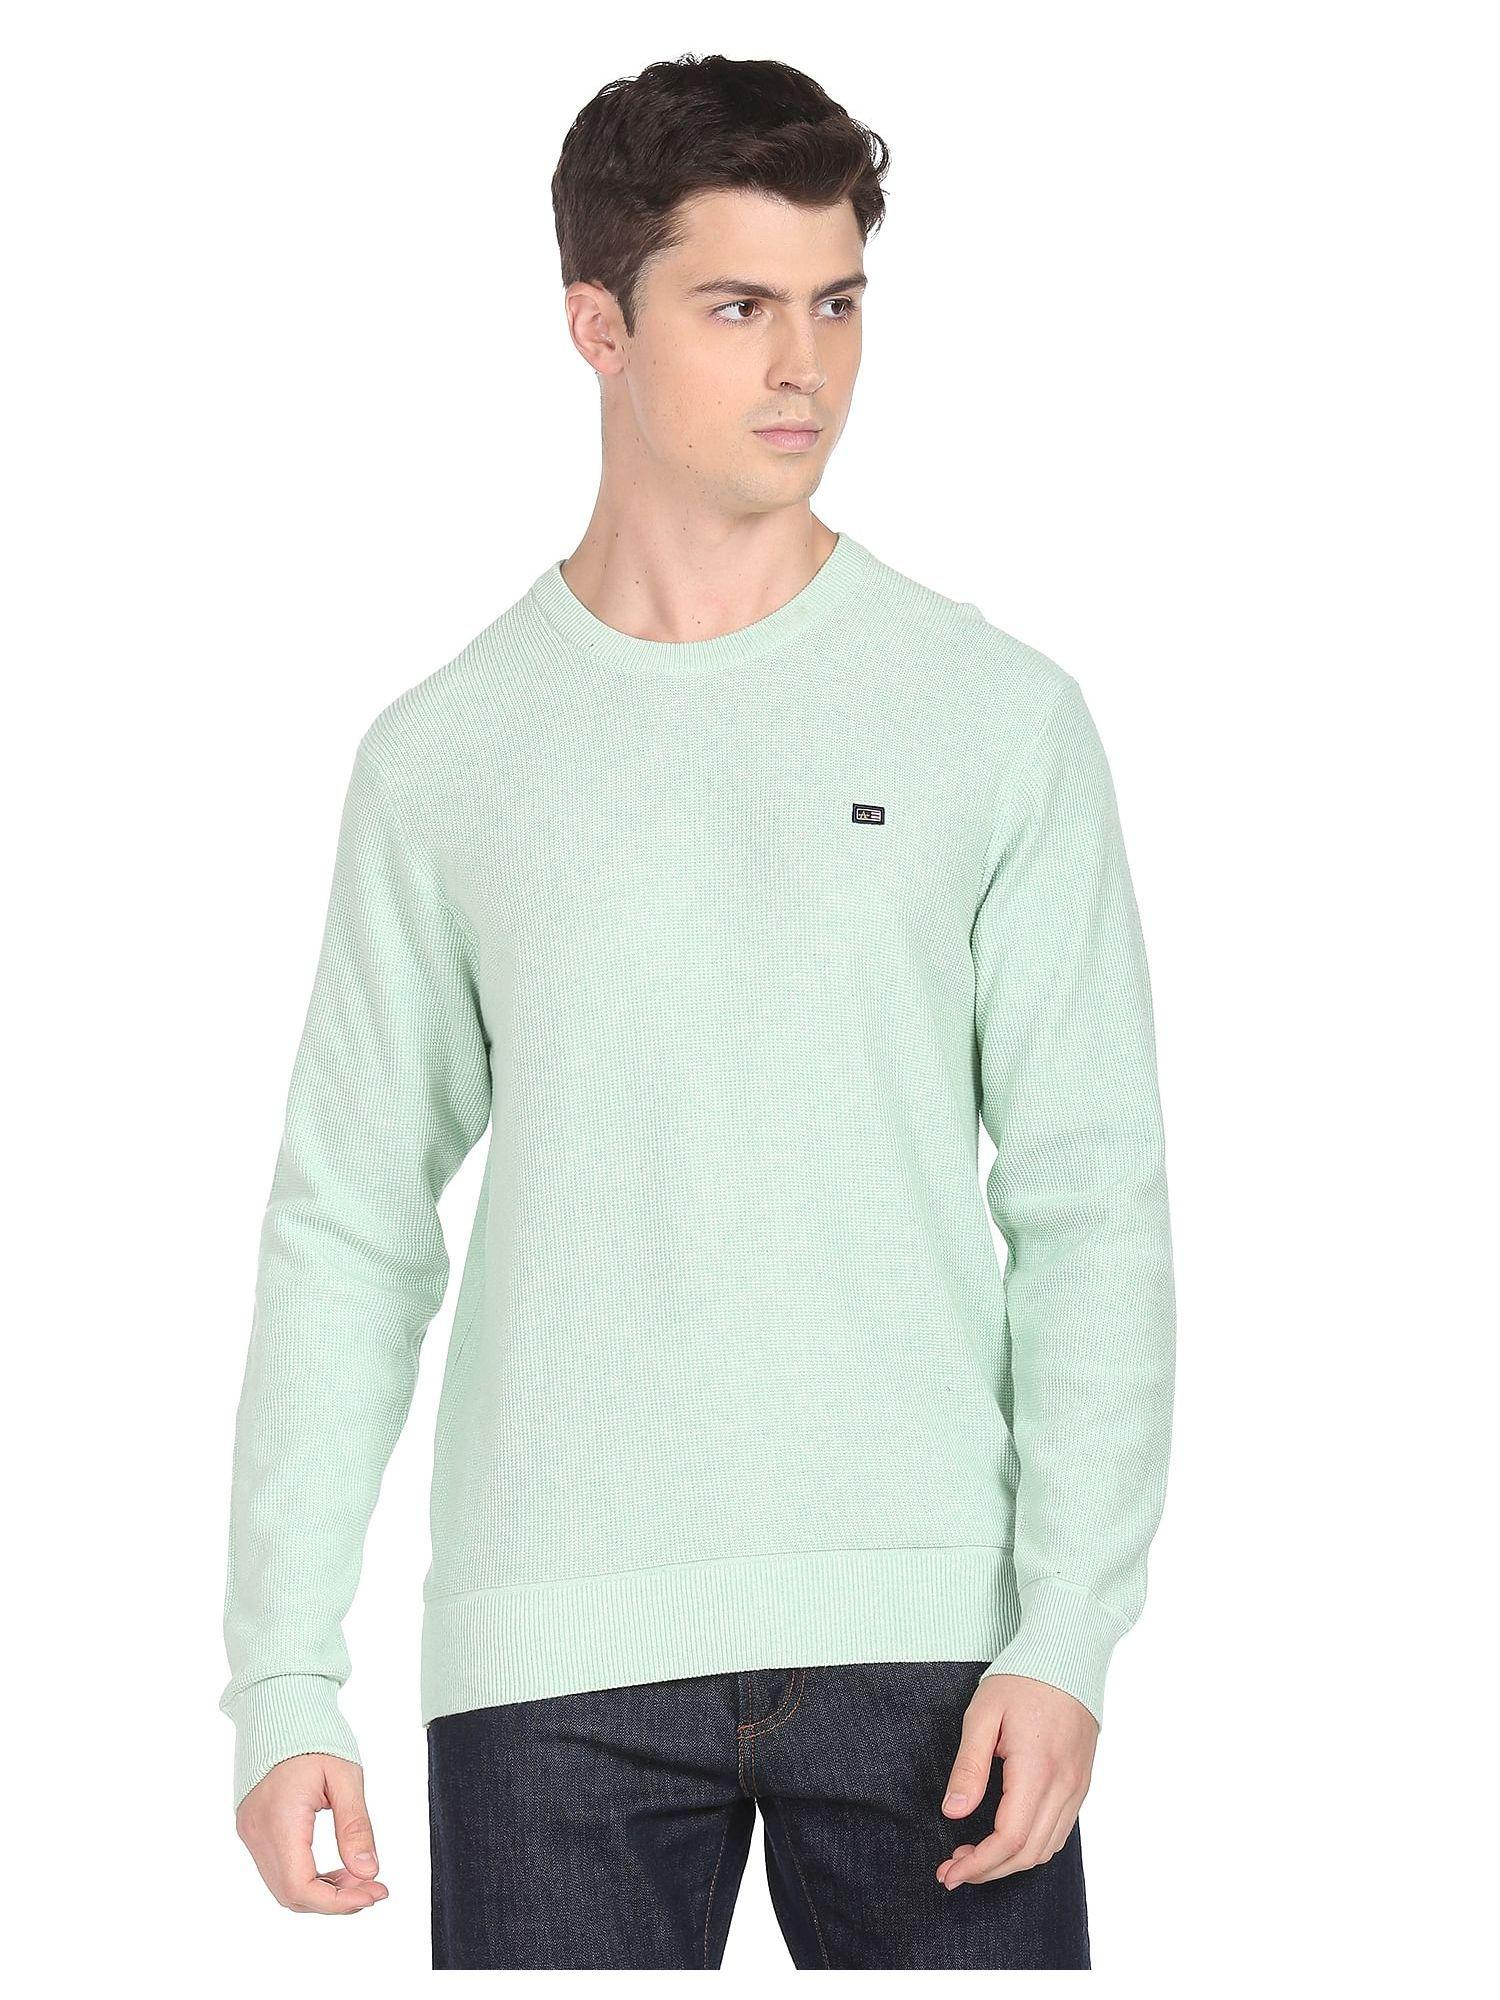 men-light-green-crew-neck-patterned-knit-sweater